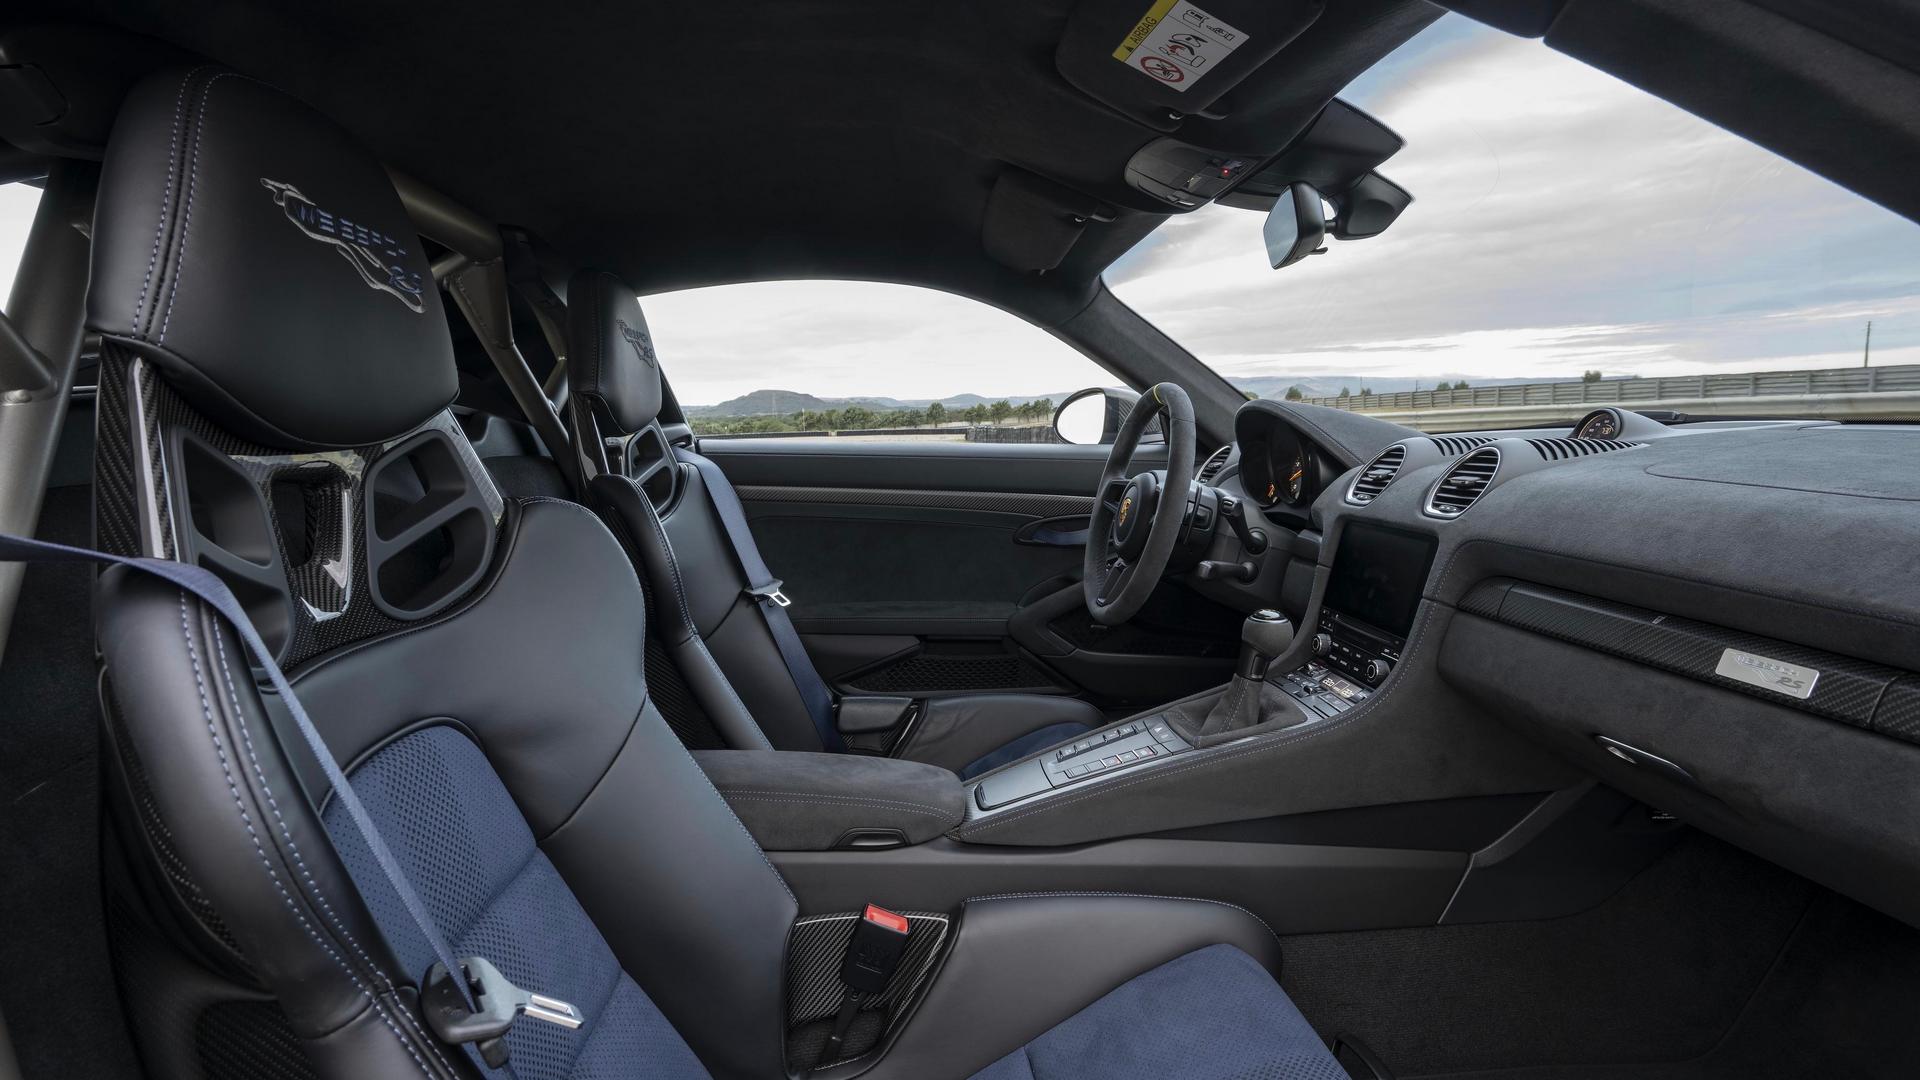 Cayman GT4 RS seats